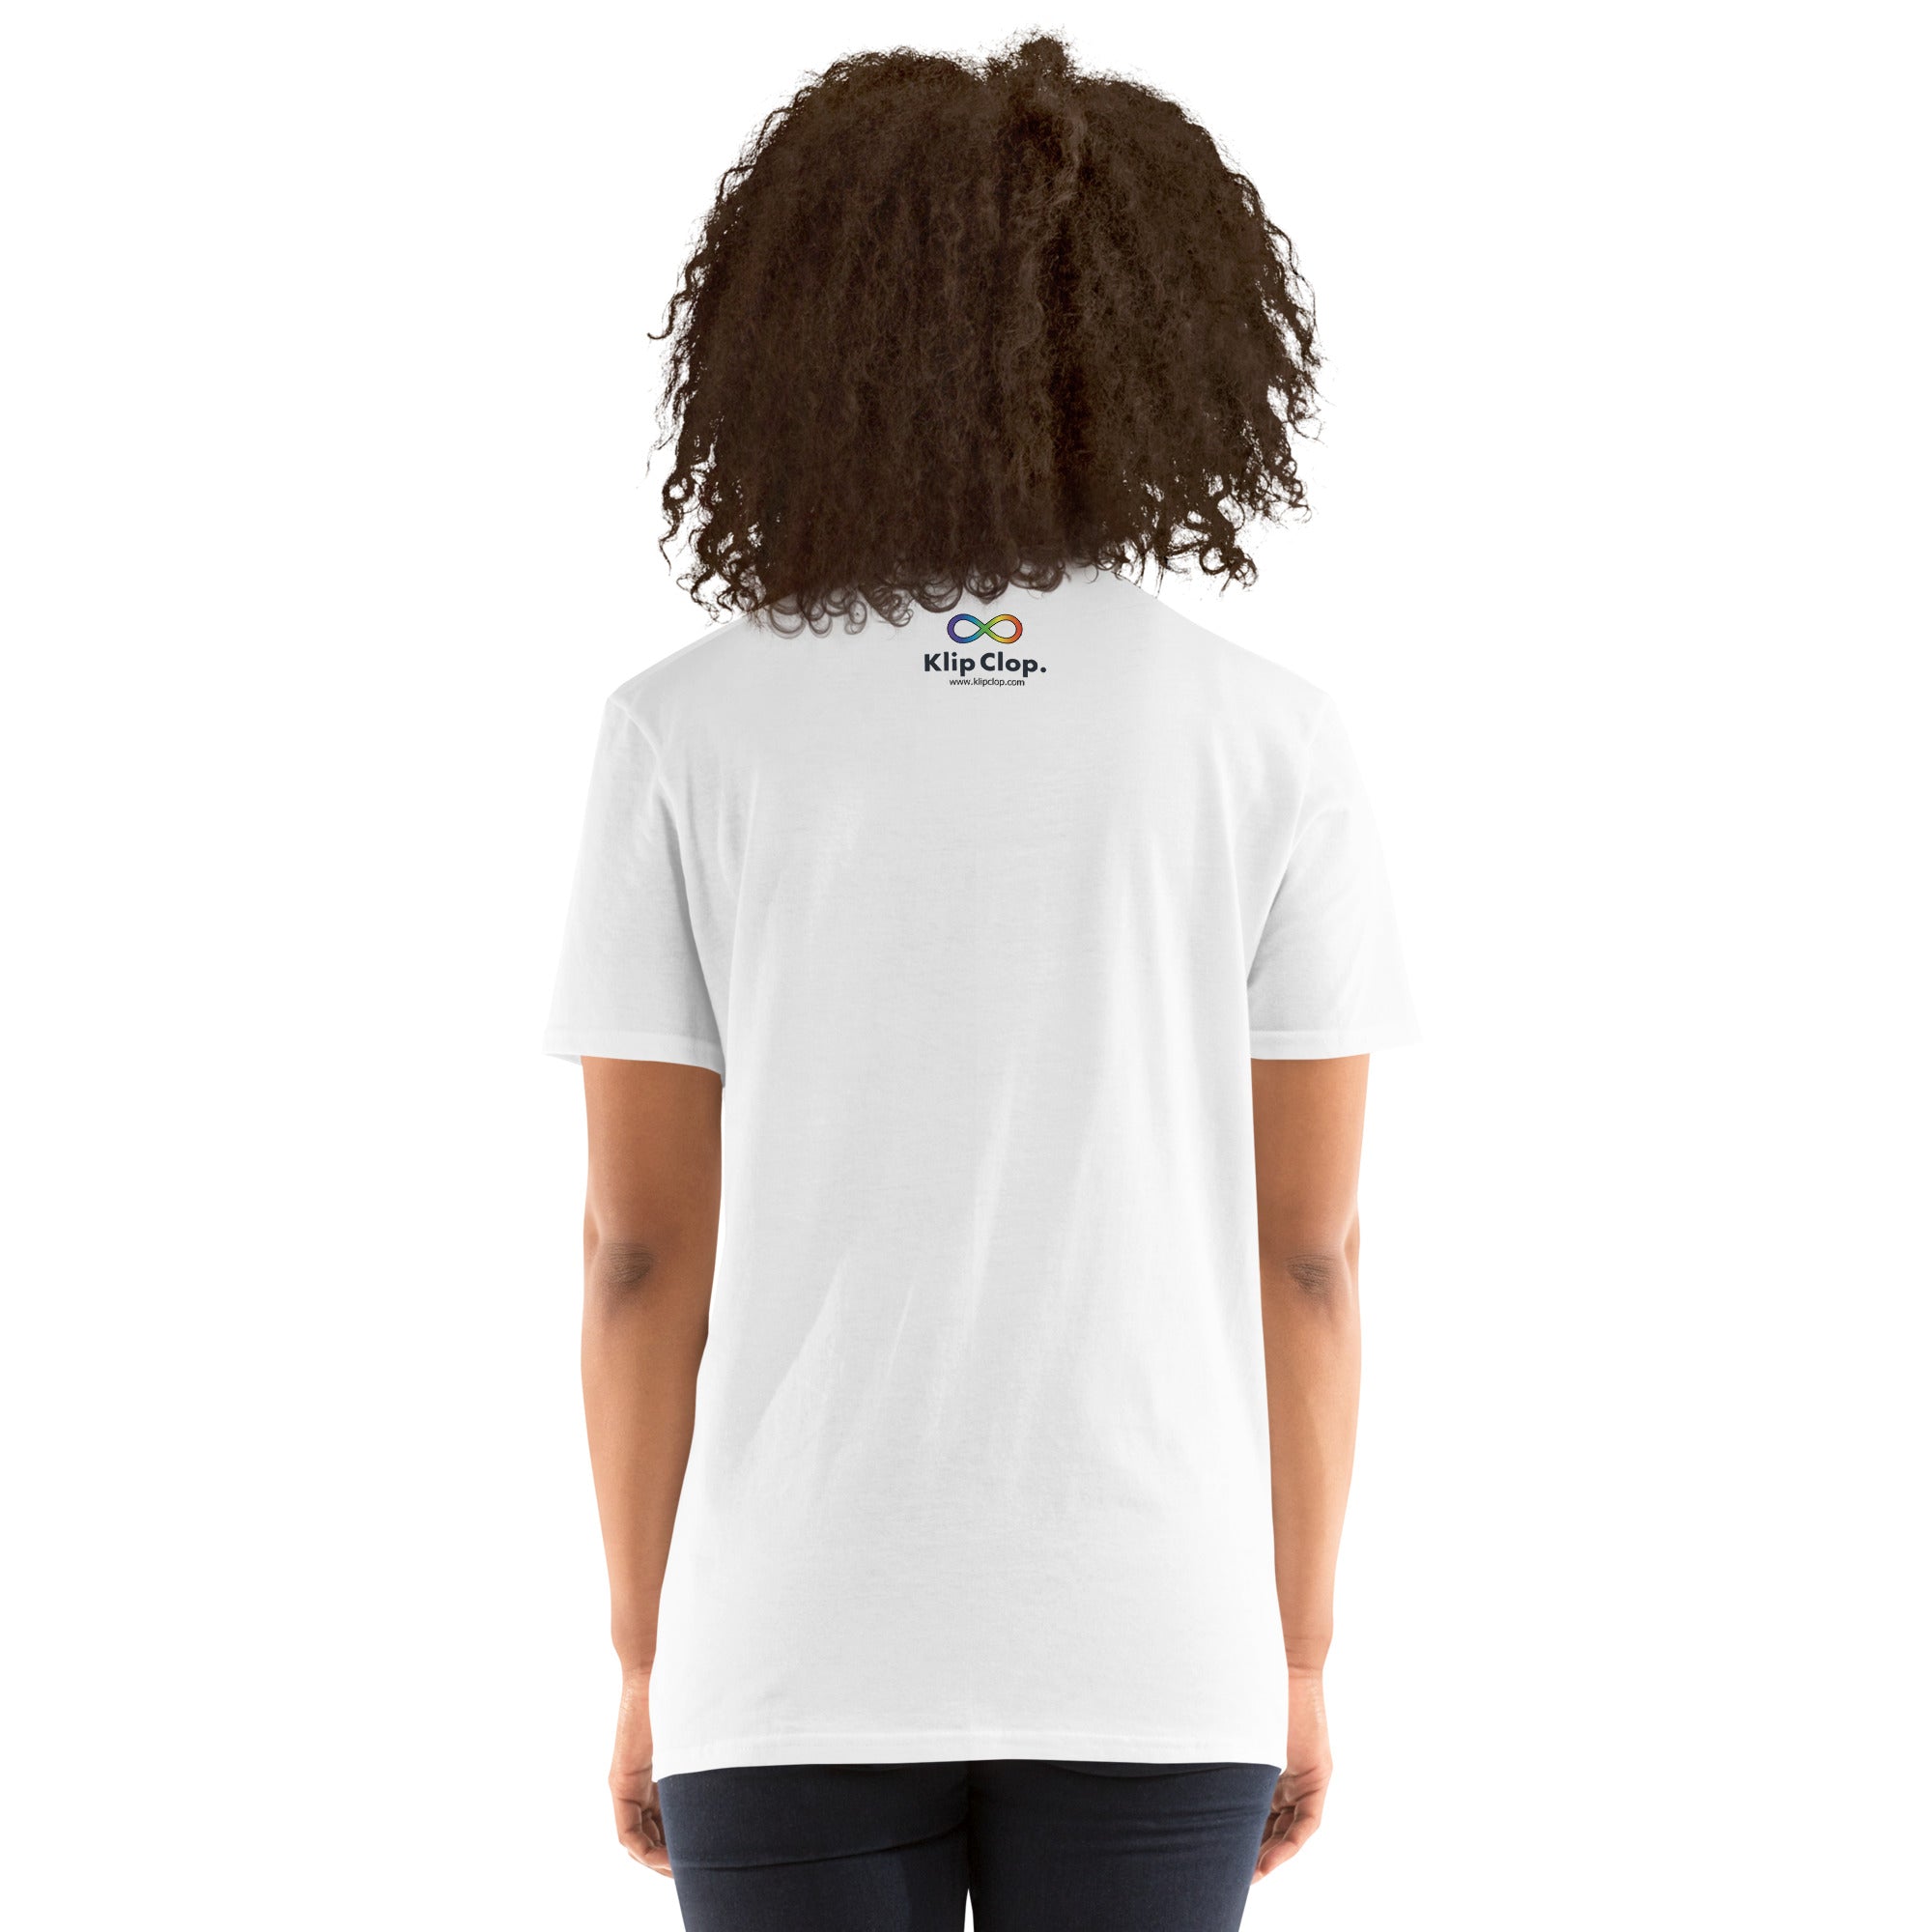 Short-Sleeve Unisex T-Shirt- ADHD- Neurotypical Woman